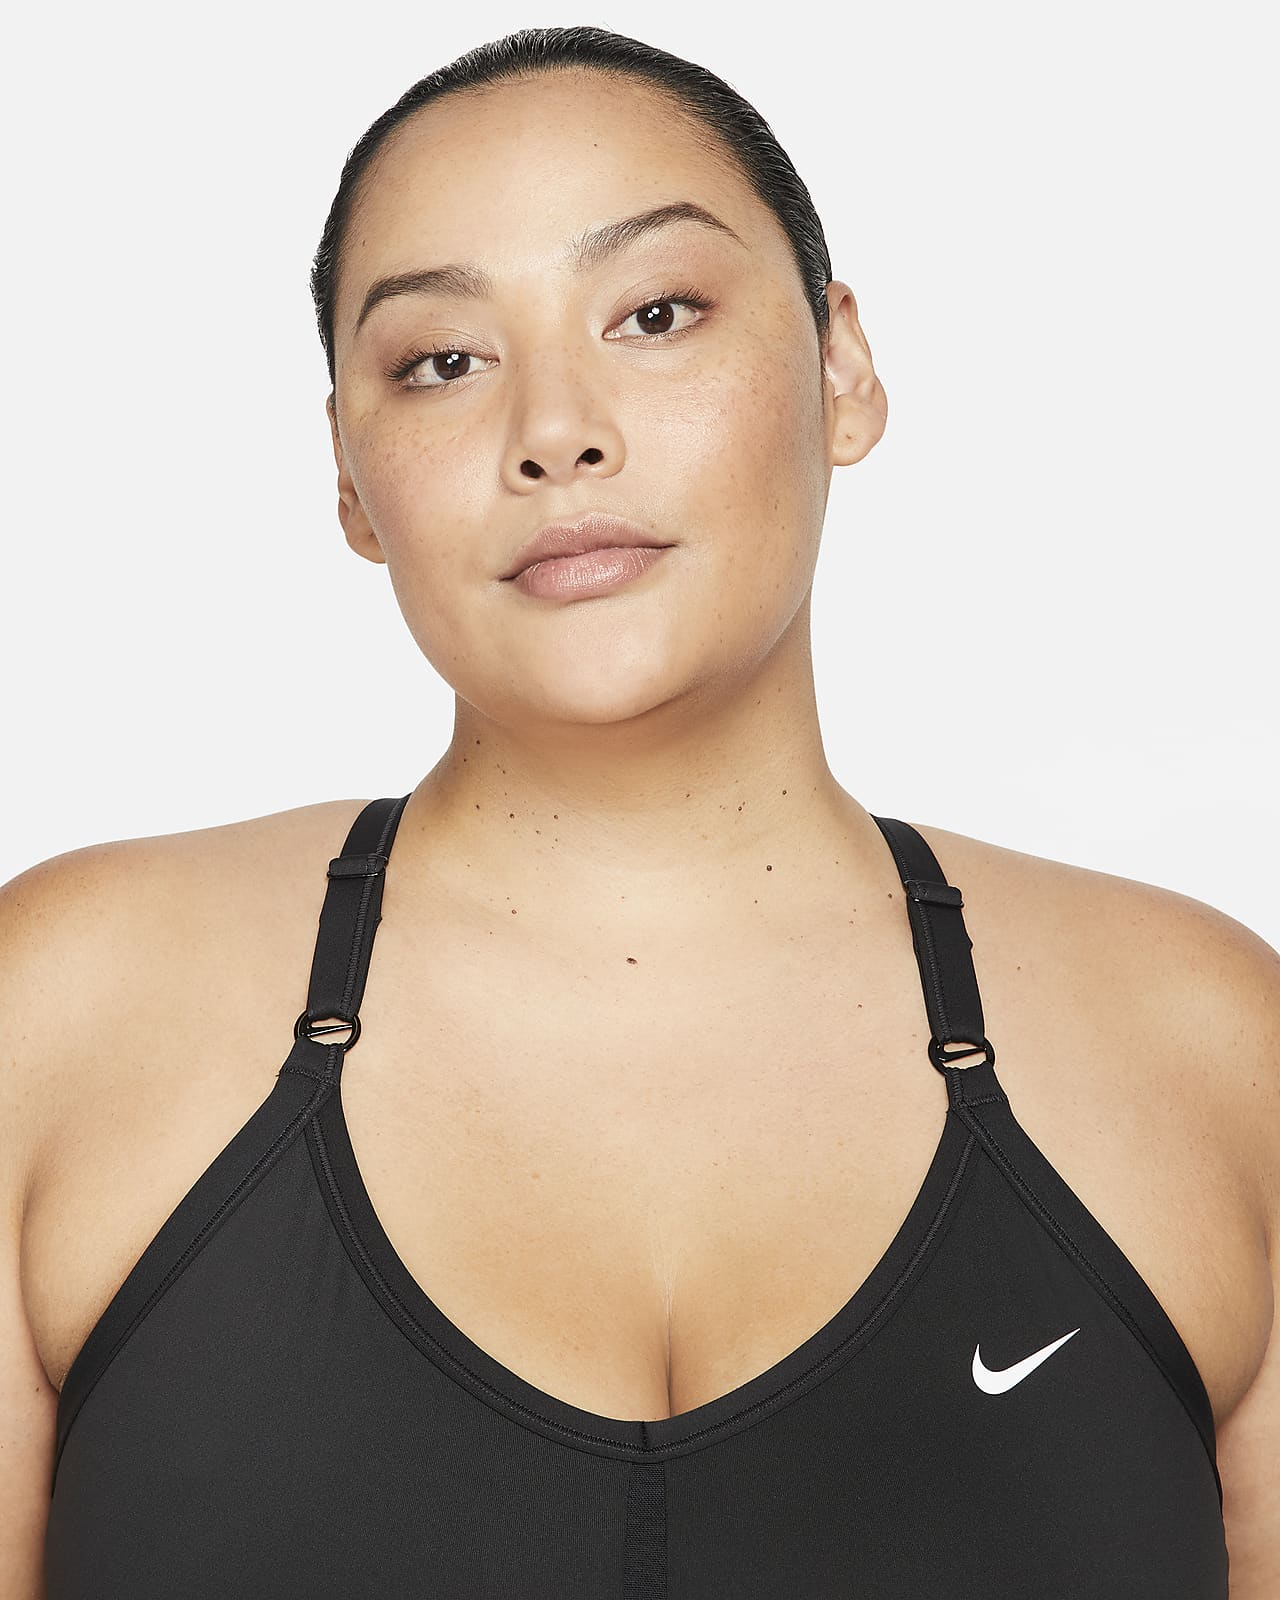 Nike Women's XS Pink Sports Bra - $12 (70% Off Retail) - From Ashley